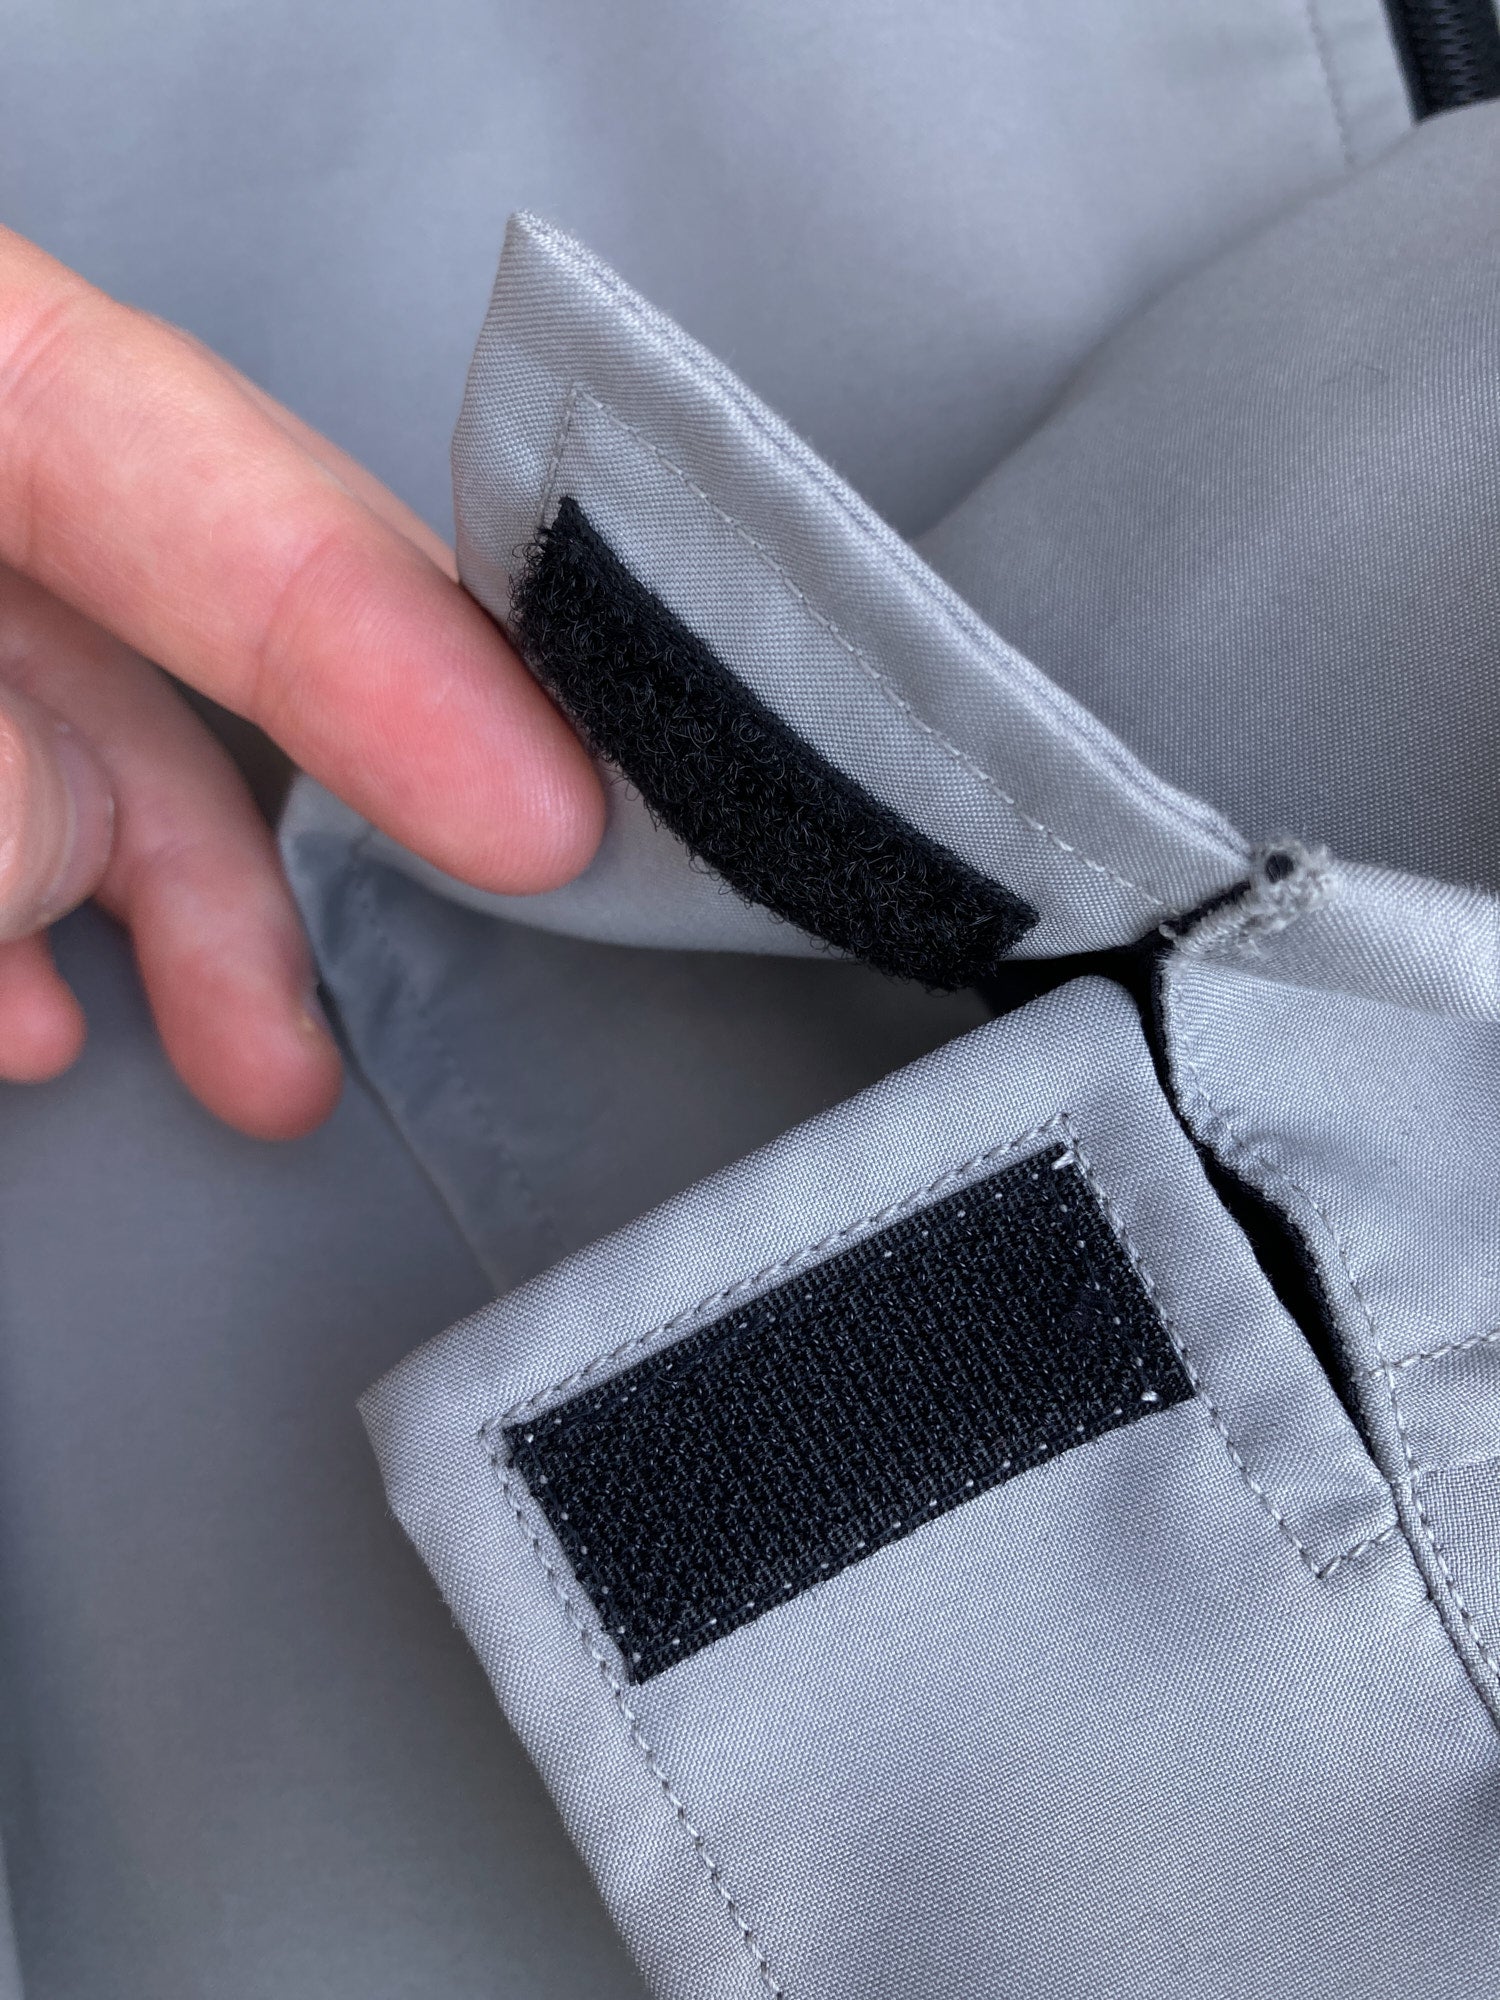 Samsonite 1990s grey poly blend zip jacket - size 50 M L